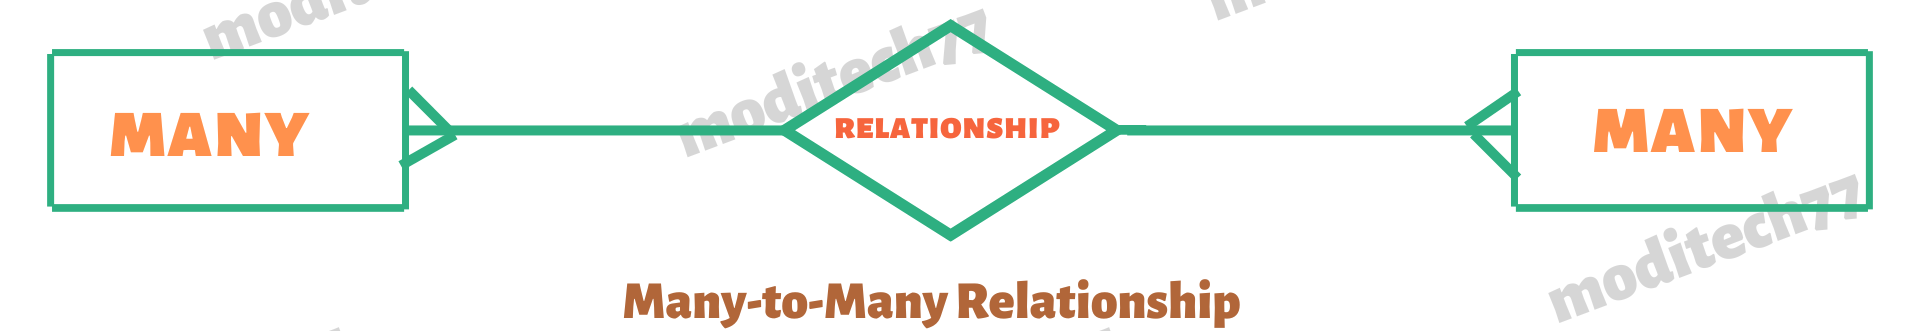 Many-to-Many Relationships